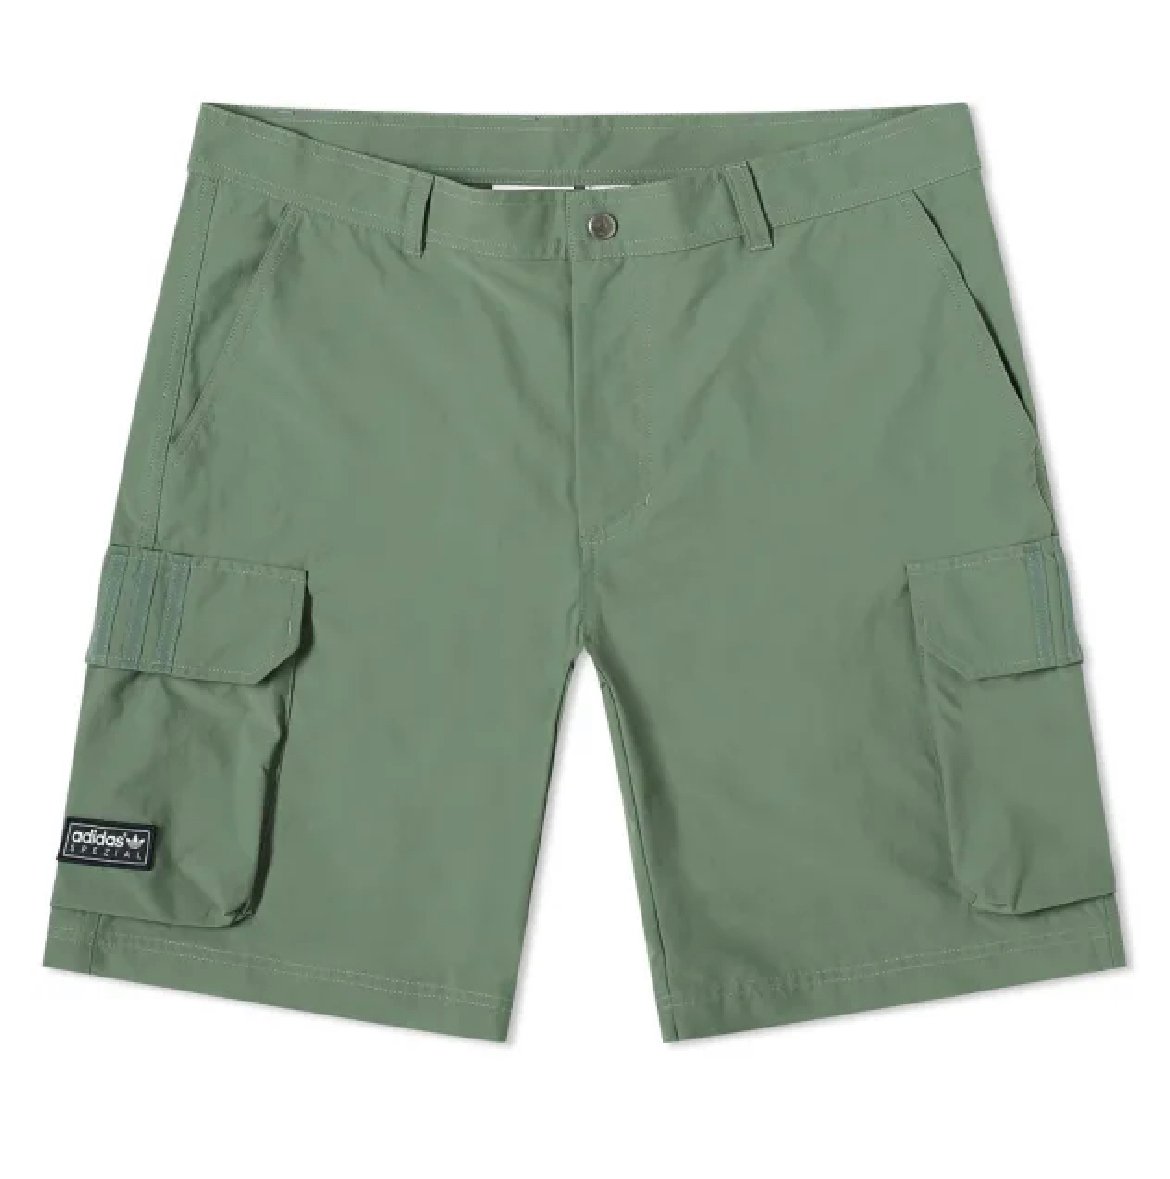 Adidas SPZL Standish Shorts | OriginalSoles